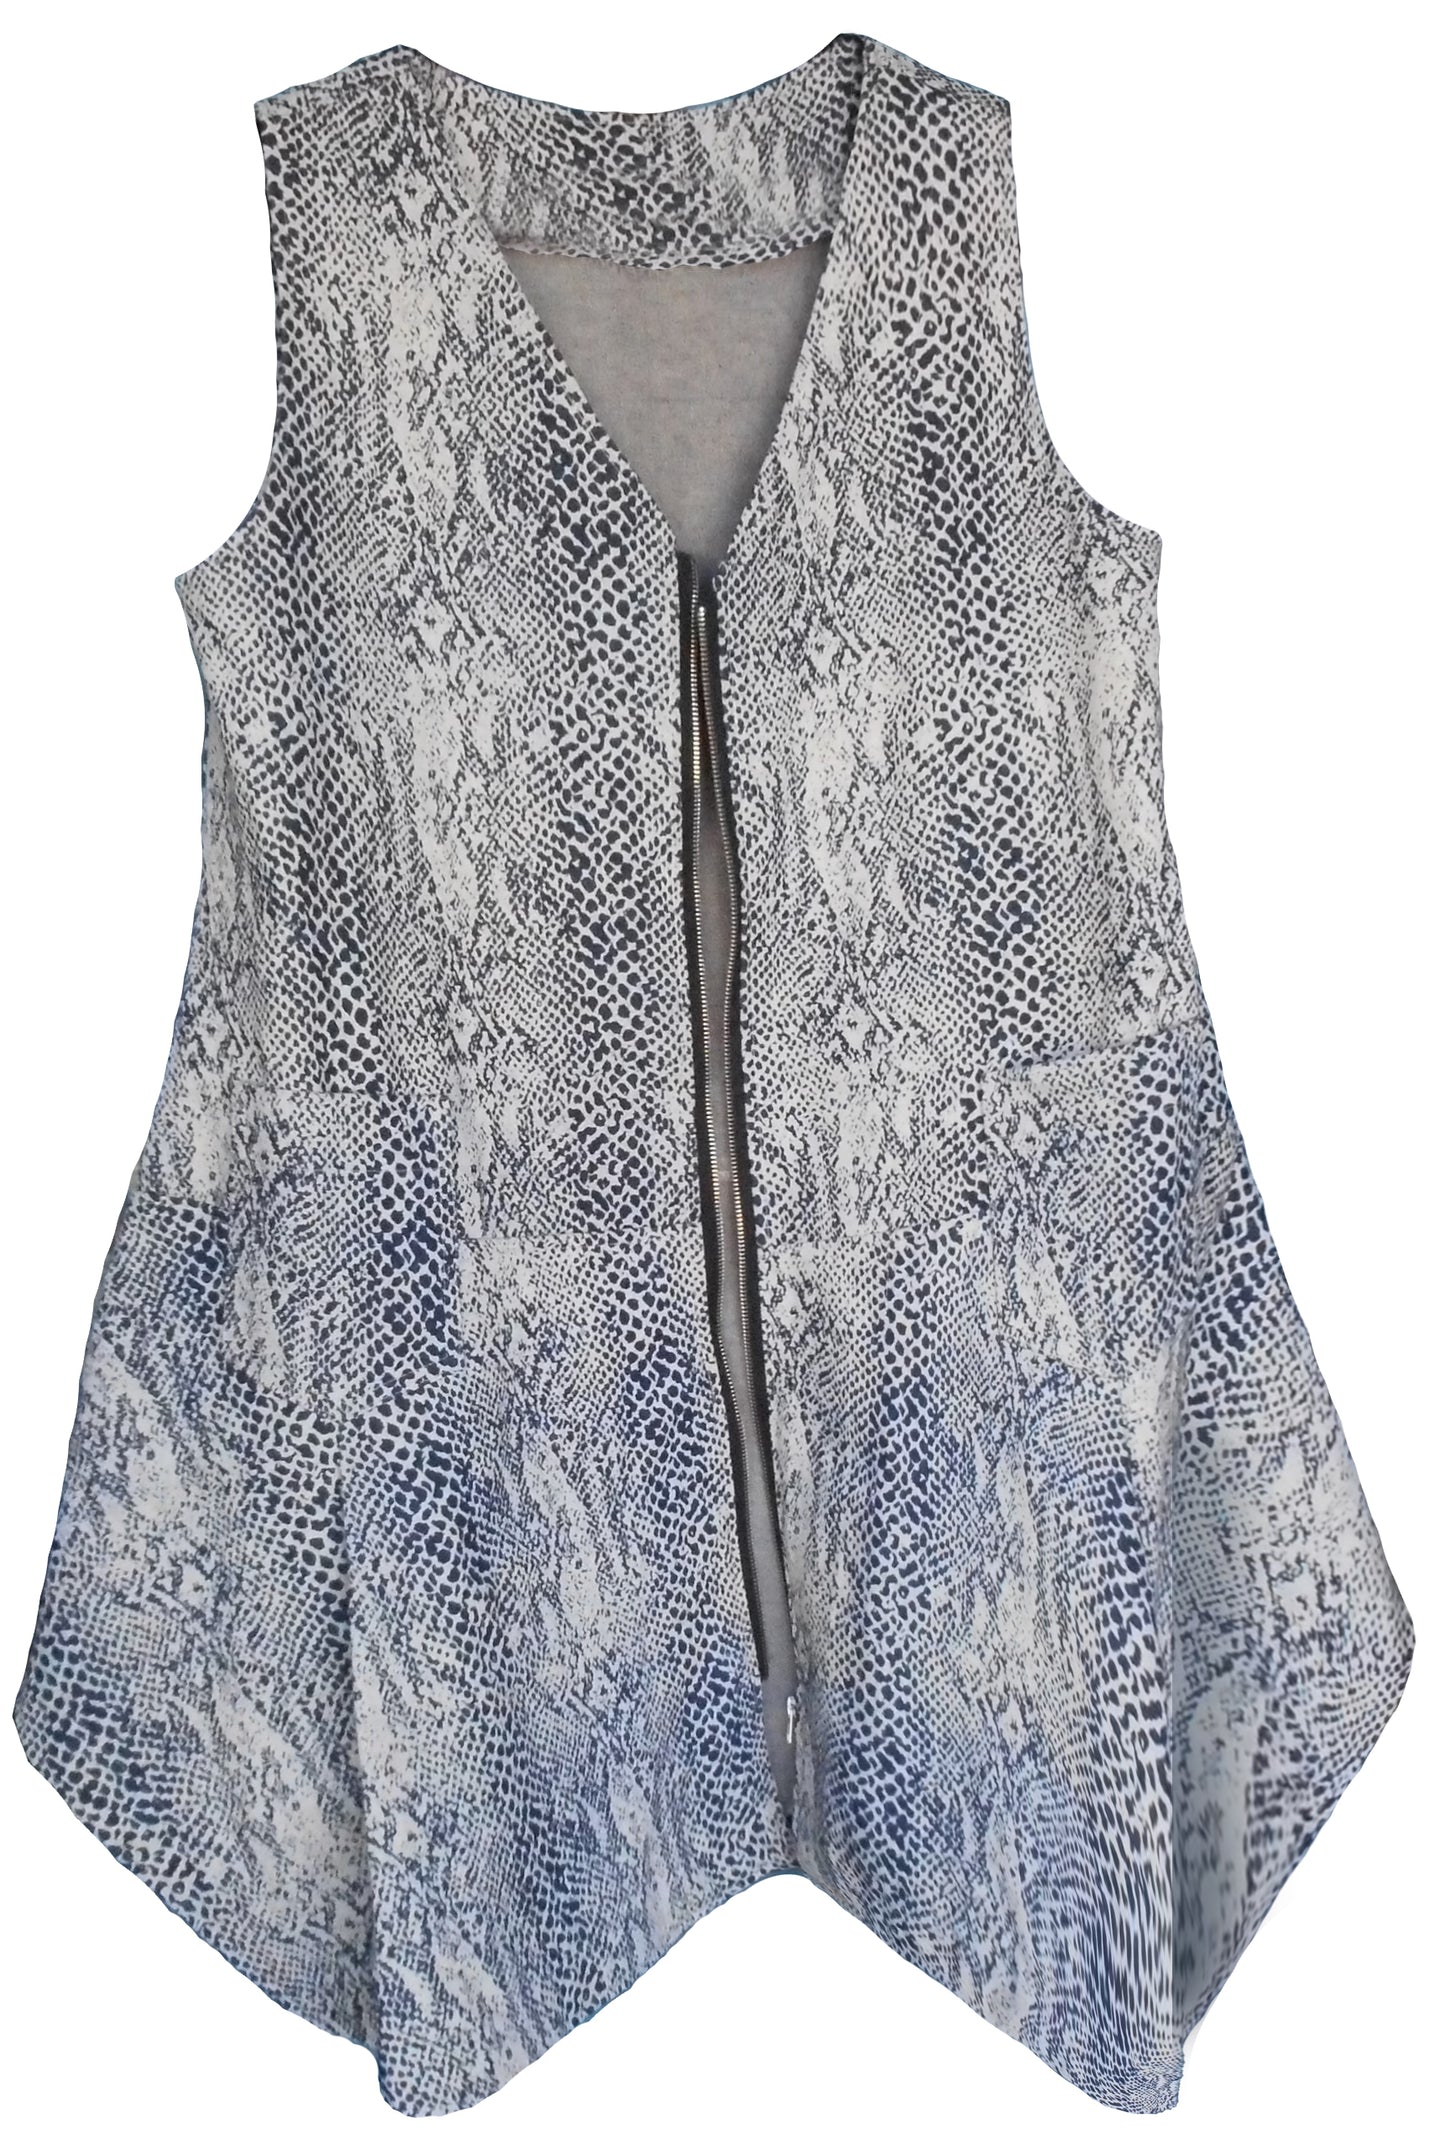 Theodora Tunic and Jacket, PDF Pattern, Large sizes